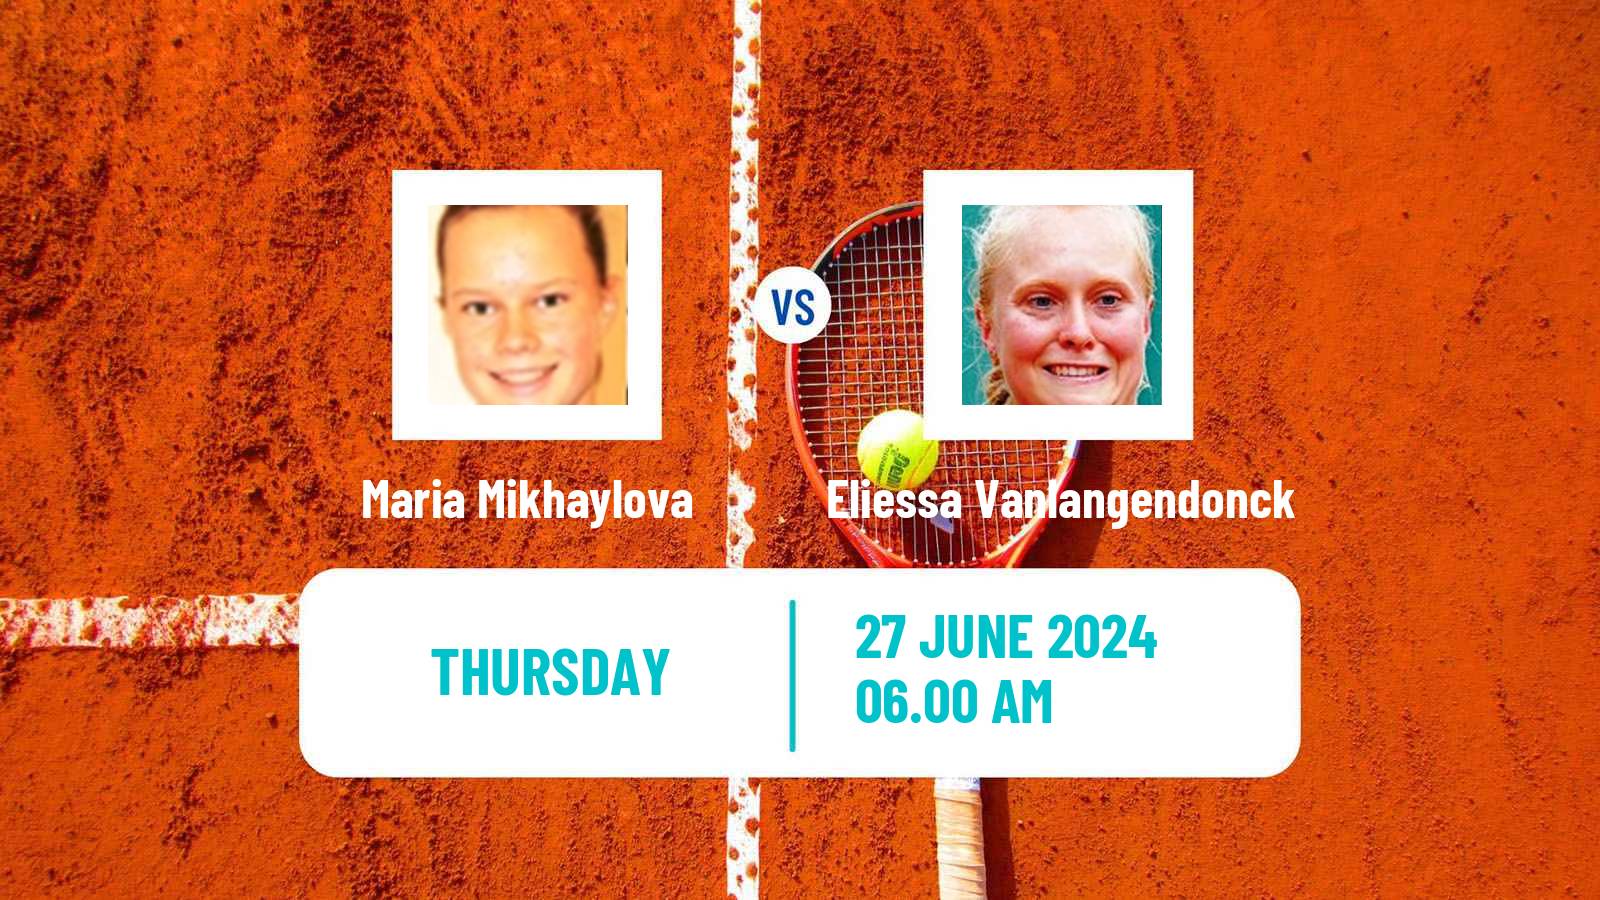 Tennis ITF W15 Hillcrest 2 Women Maria Mikhaylova - Eliessa Vanlangendonck